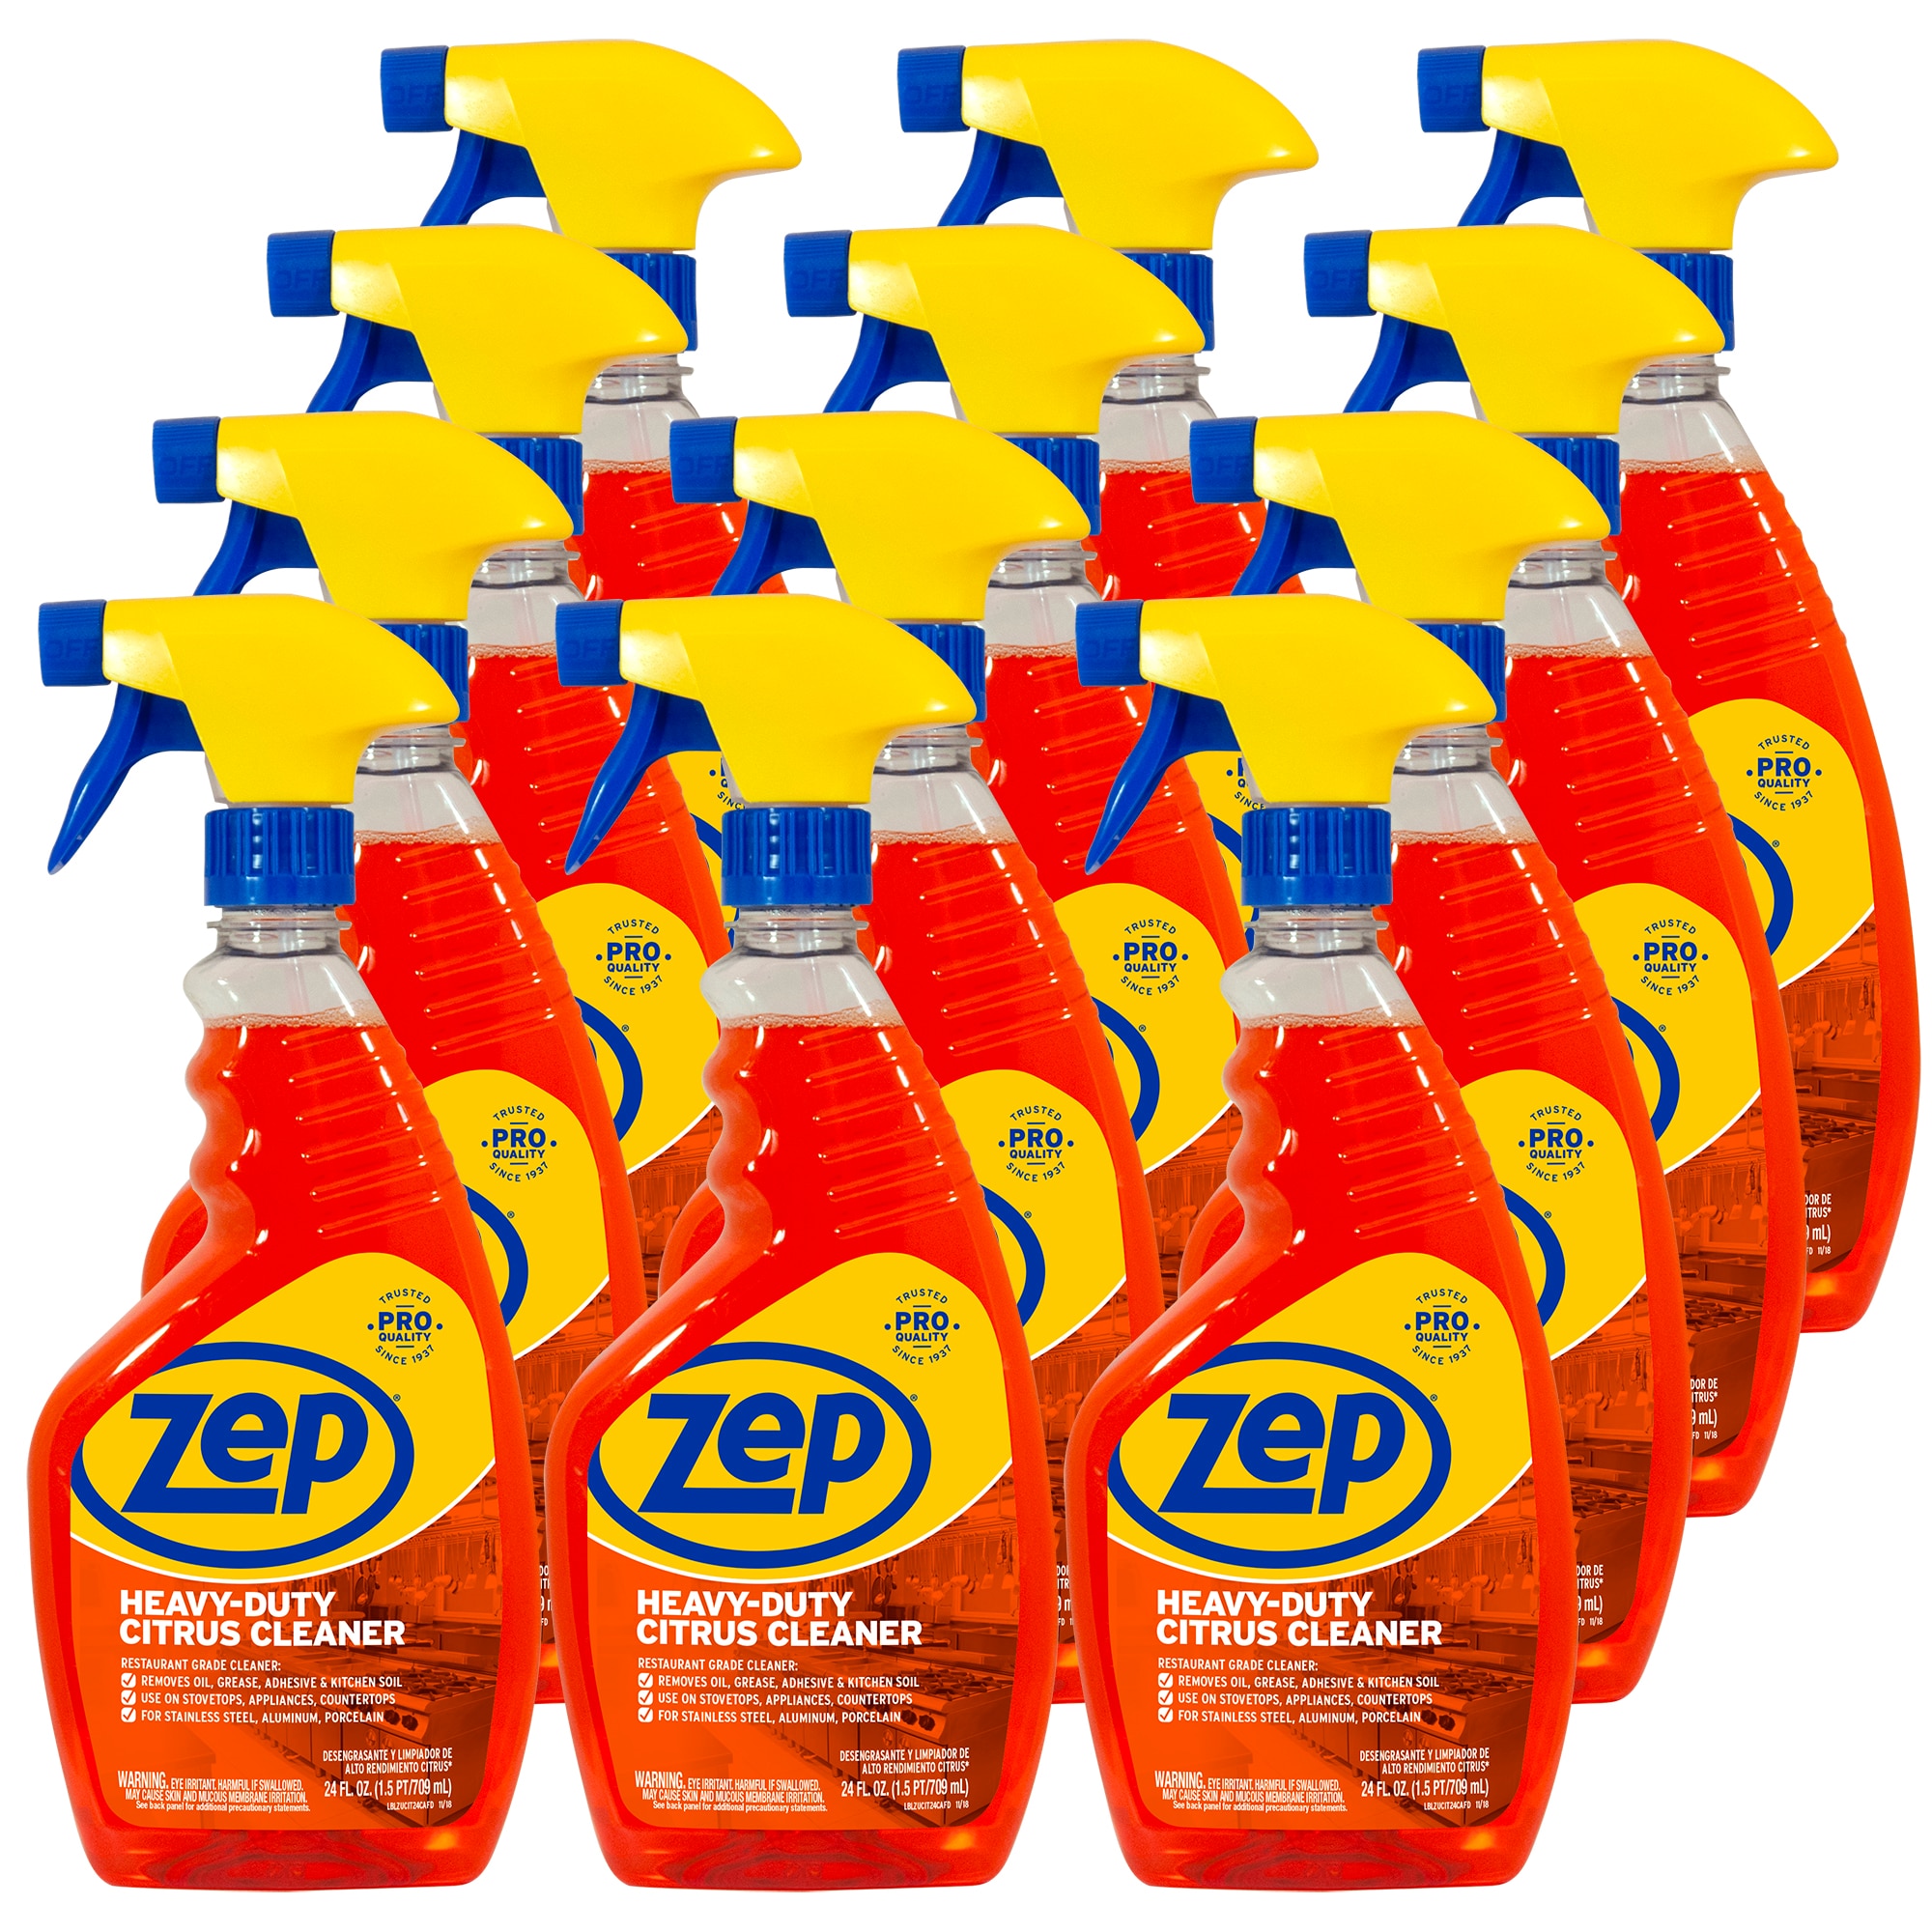 Zep Big Orange-E Organic Cleaner & Degreaser, 32 oz. Bottle, 12 Bottles/Case